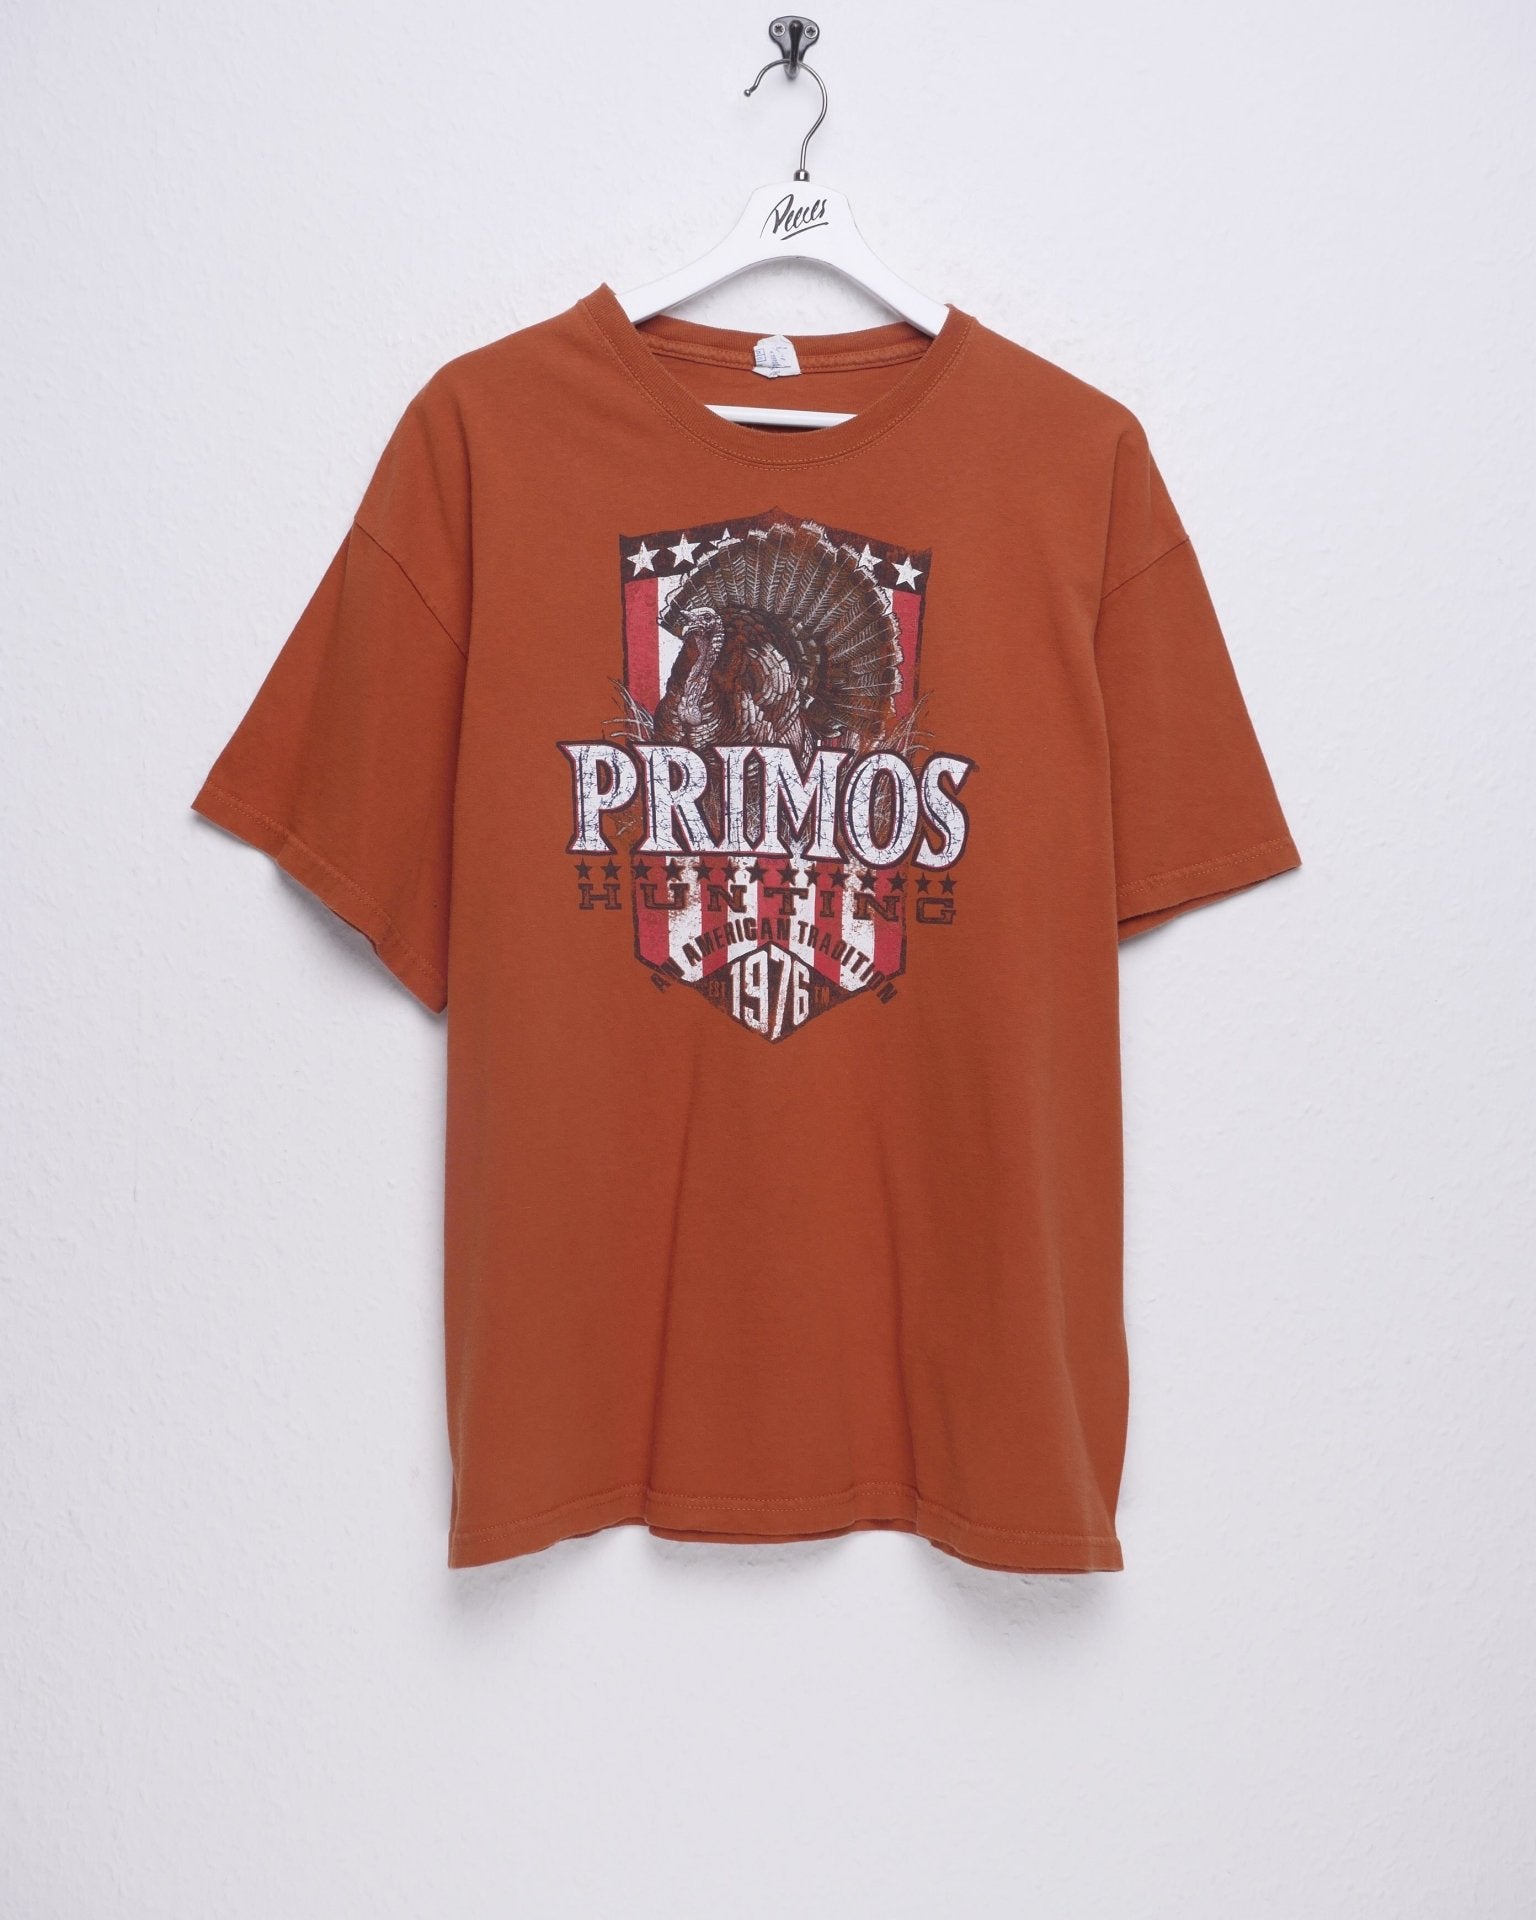 Delta printed Primos Hunting Graphic Shirt - Peeces